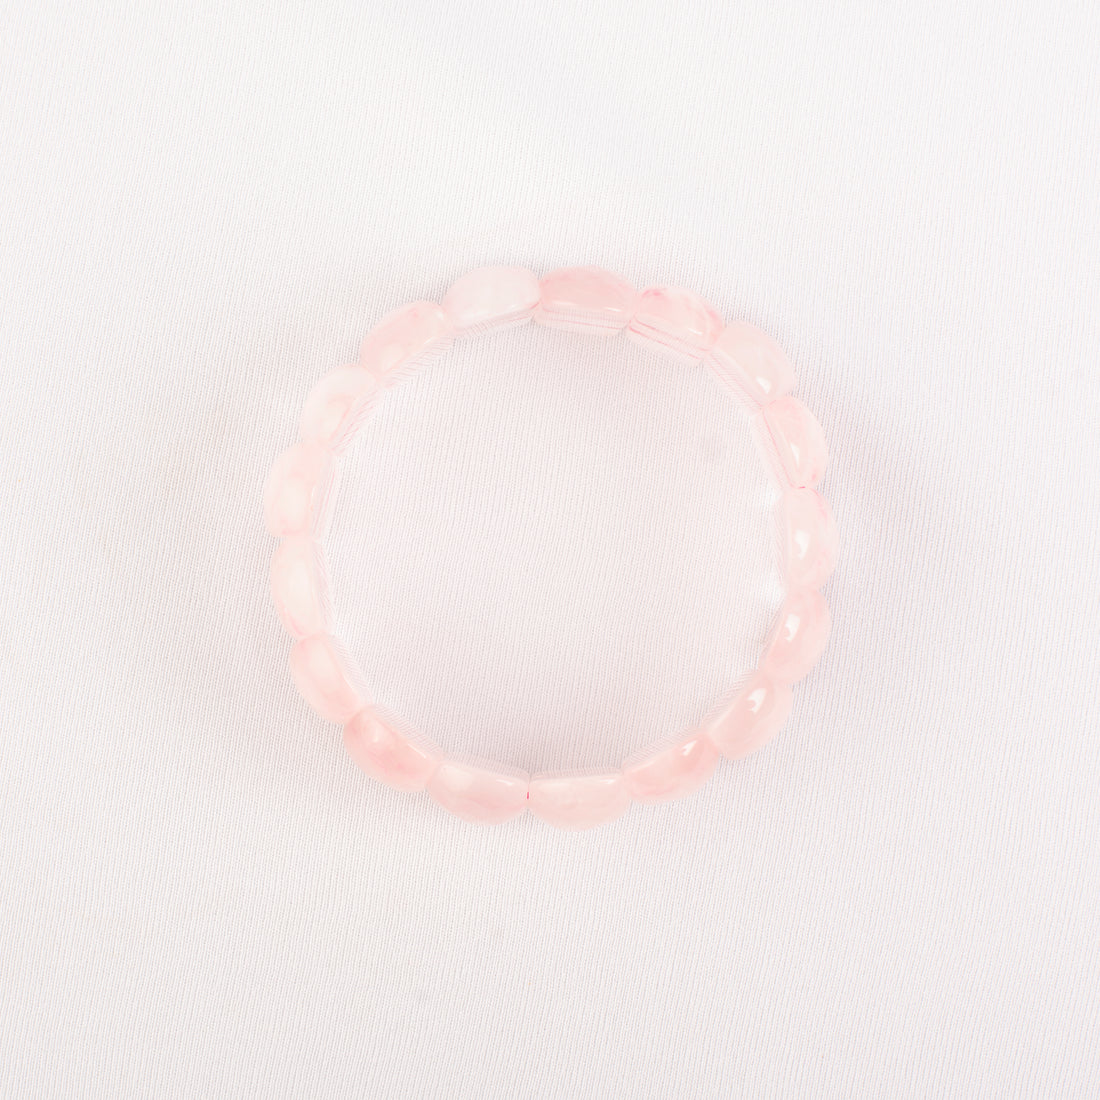 Rose Quartz Oval Beads Bracelet